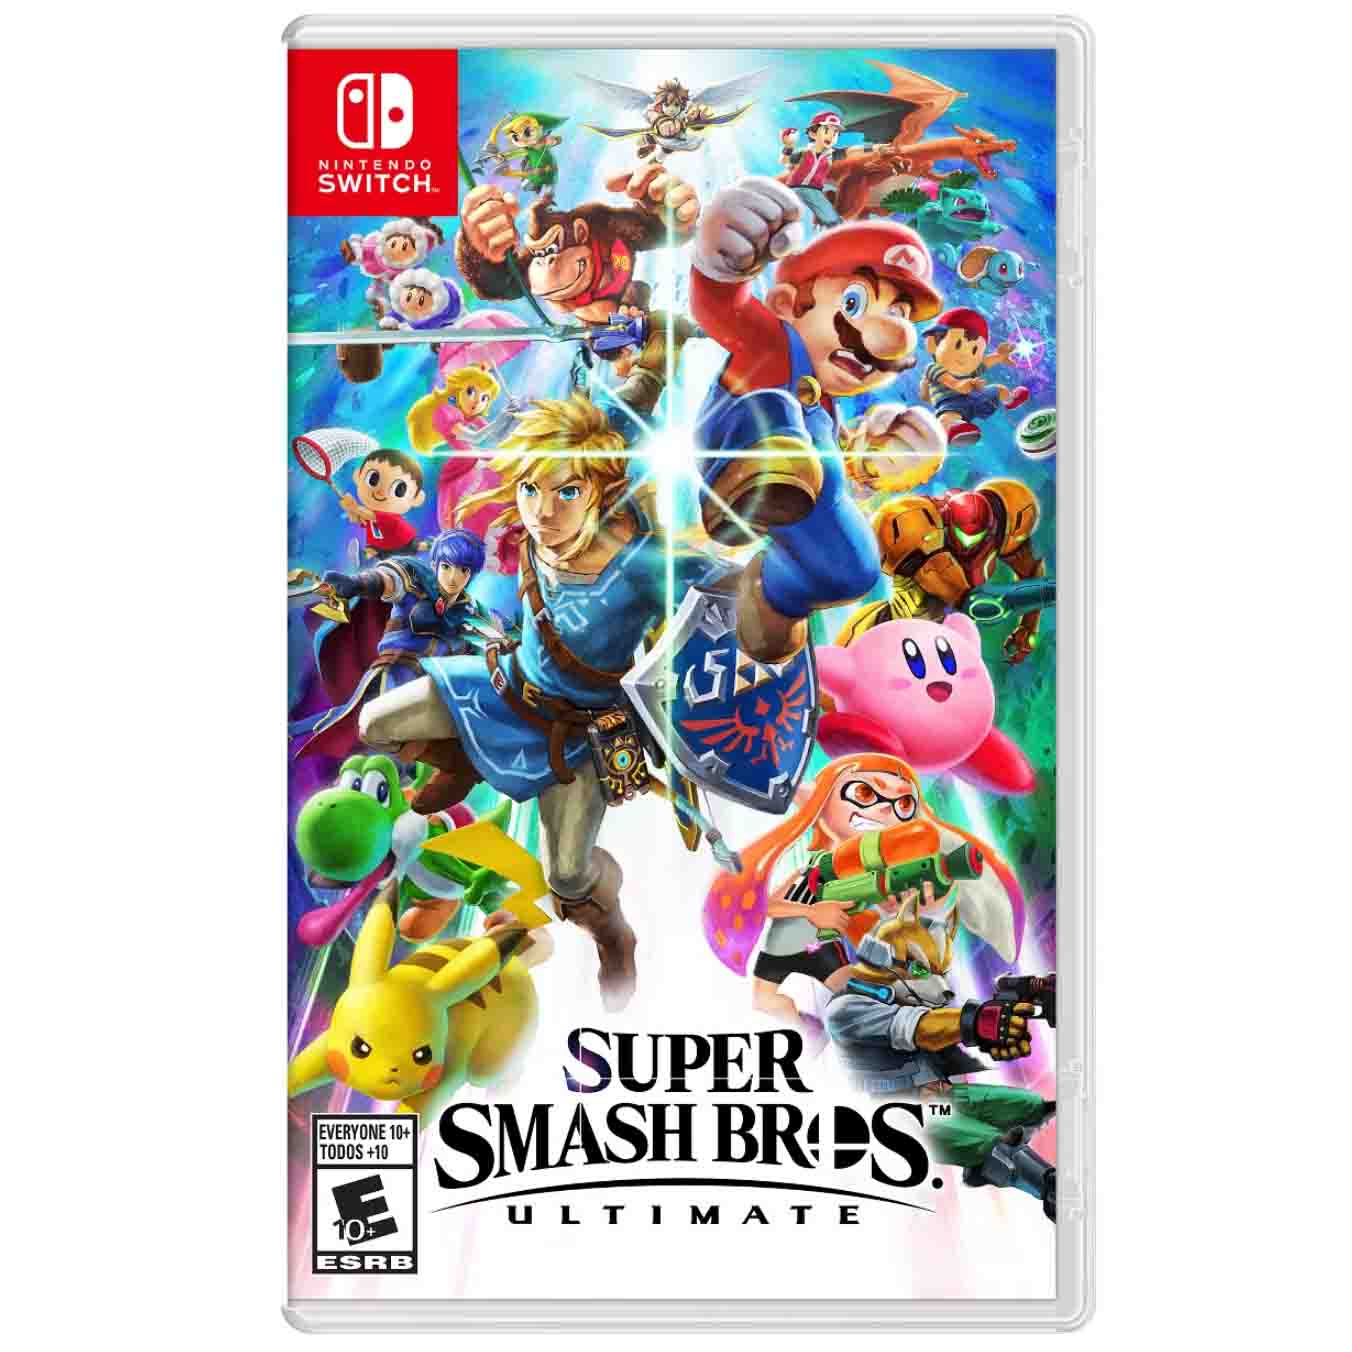 Super Smash Bros Ultimate game cover